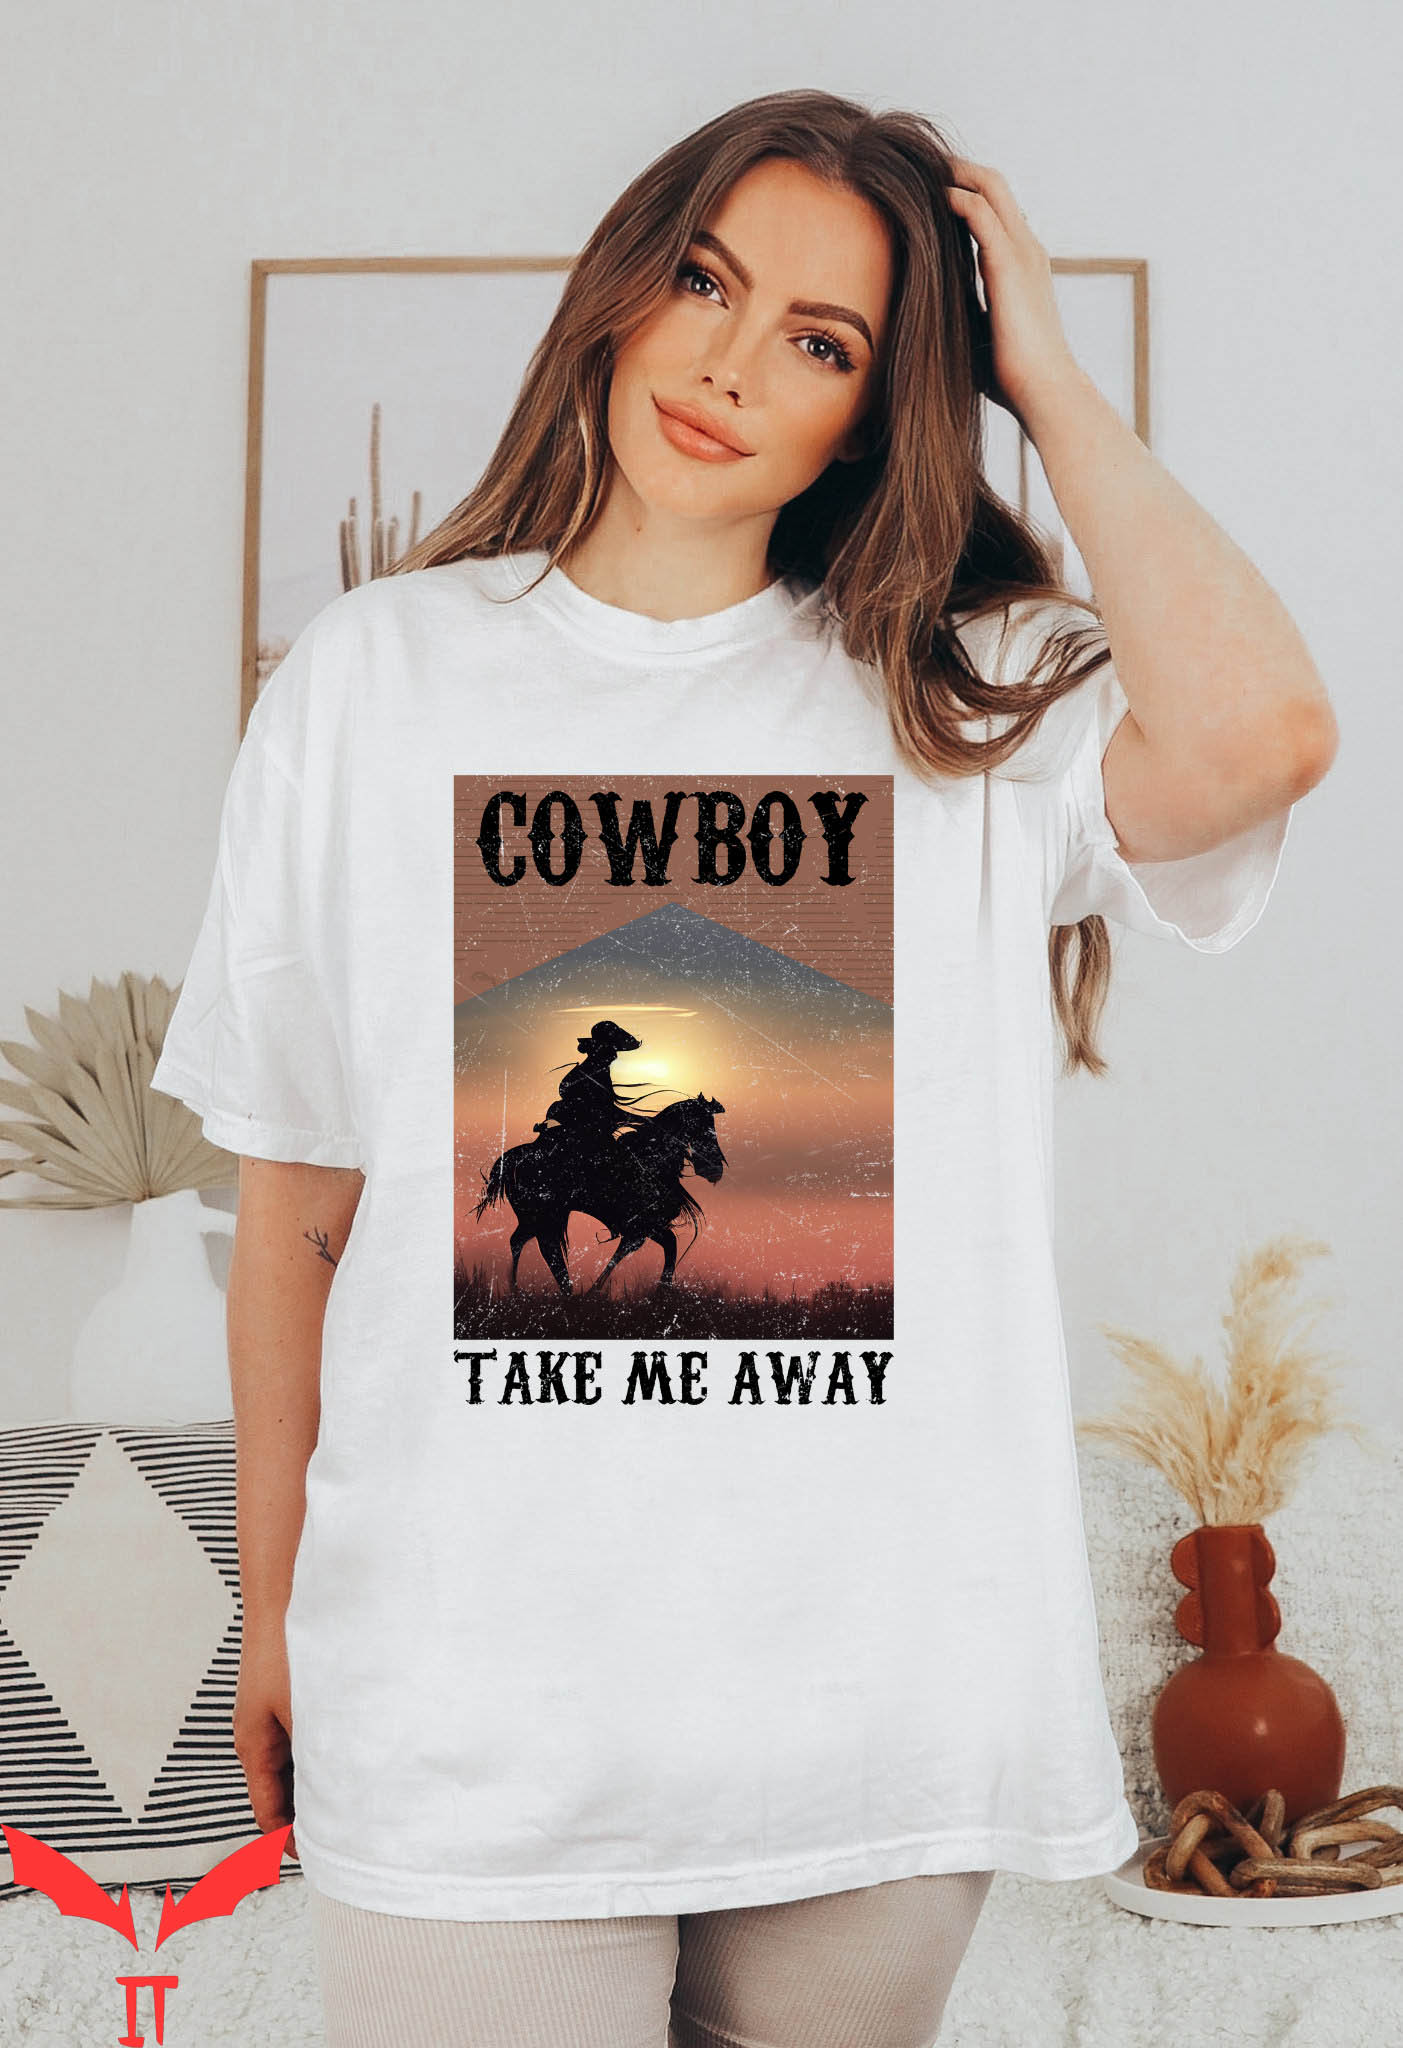 Cowboy Take Me Away T-Shirt Western Cowgirl Vintage Shirt